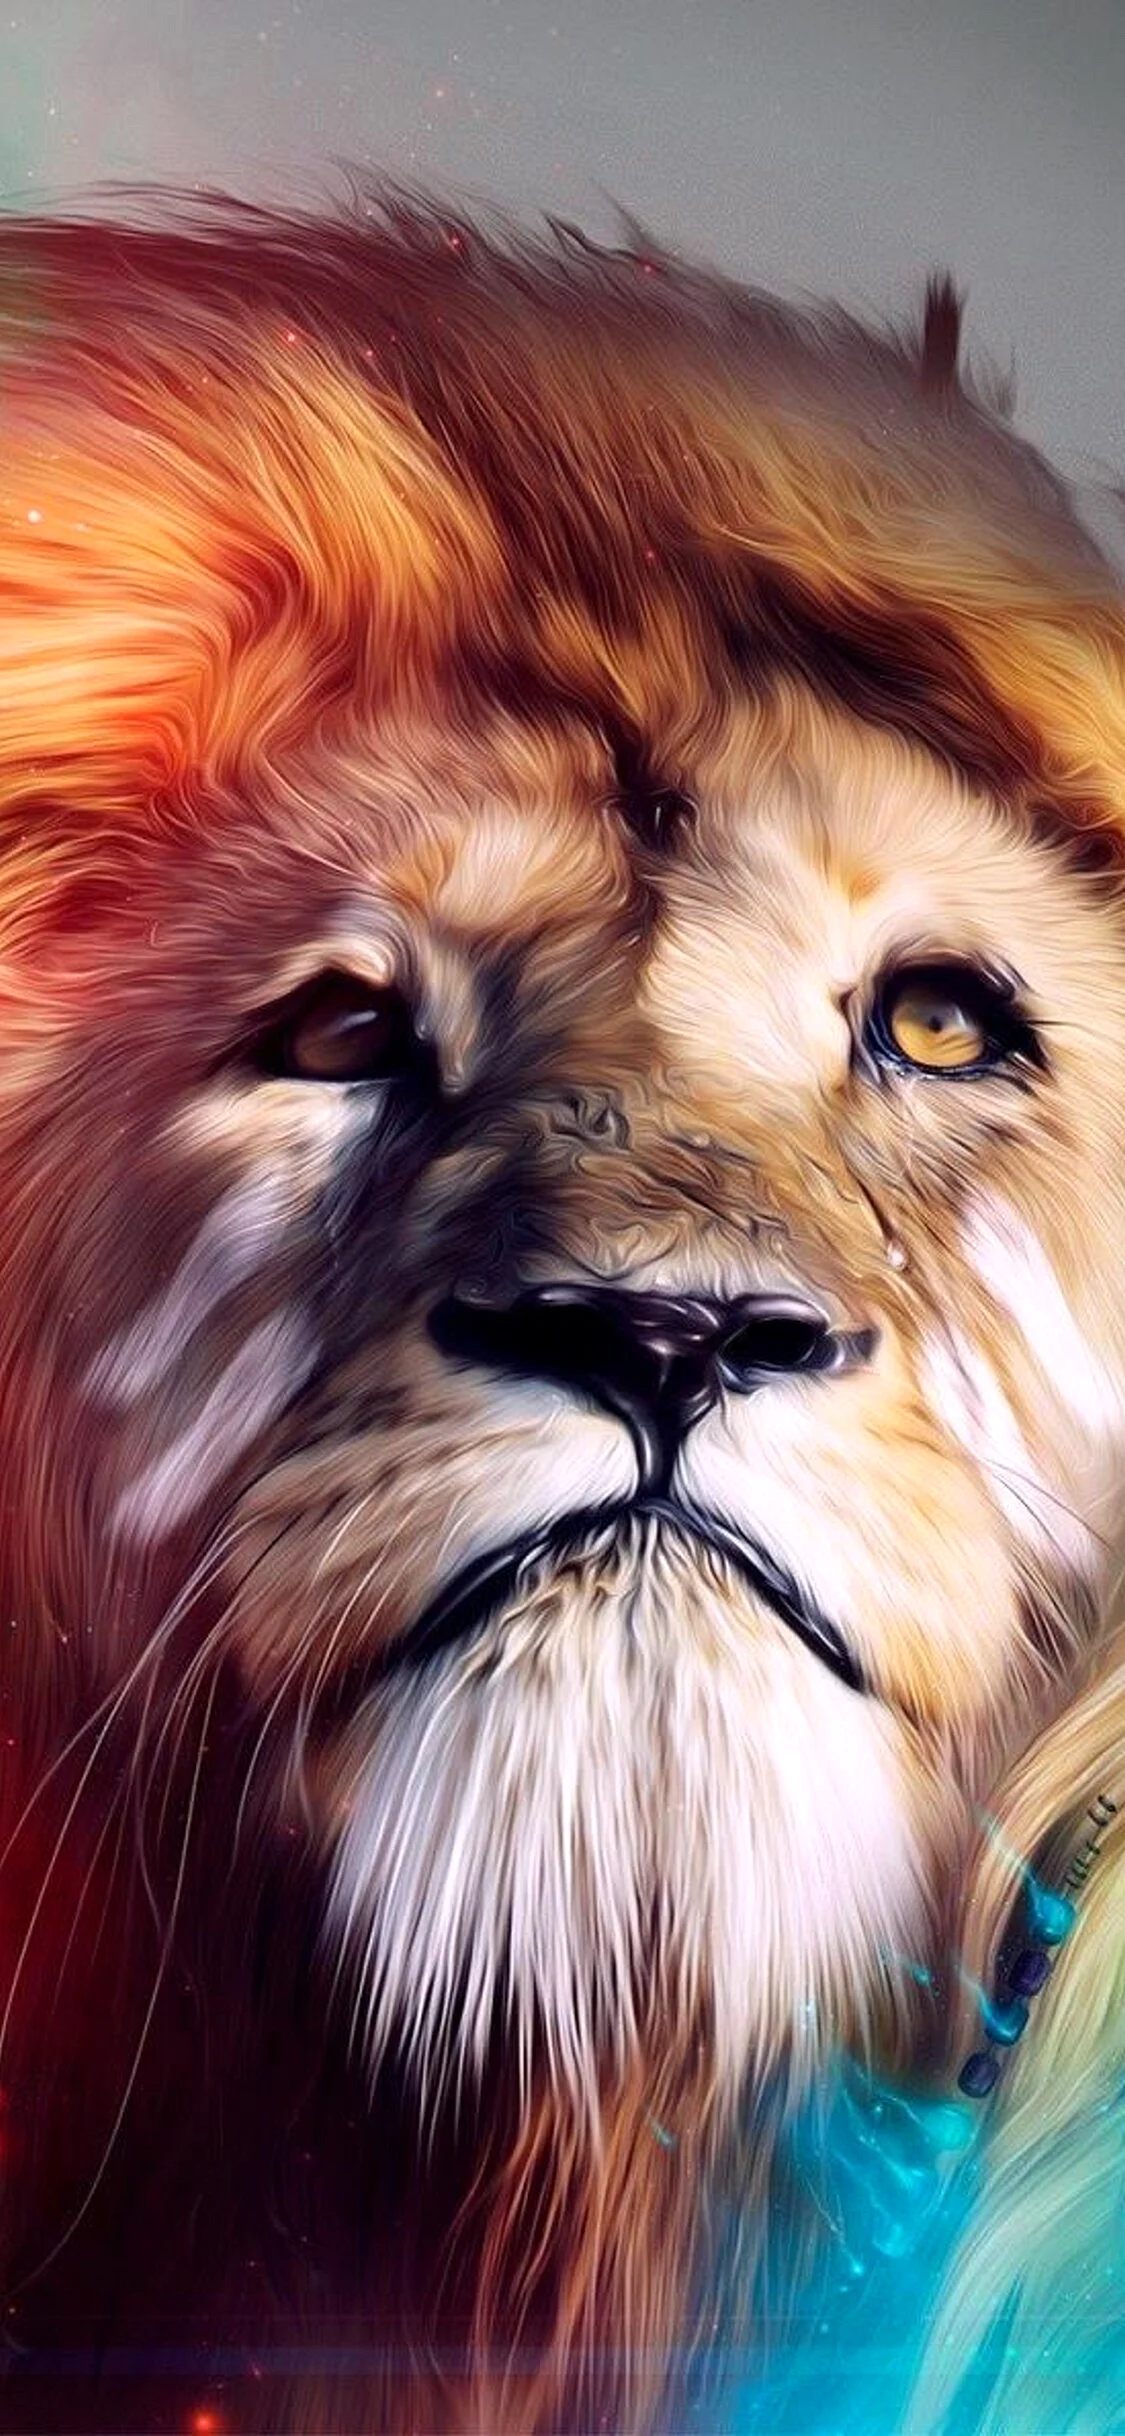 Lion Art Wallpaper for iPhone 11 Pro